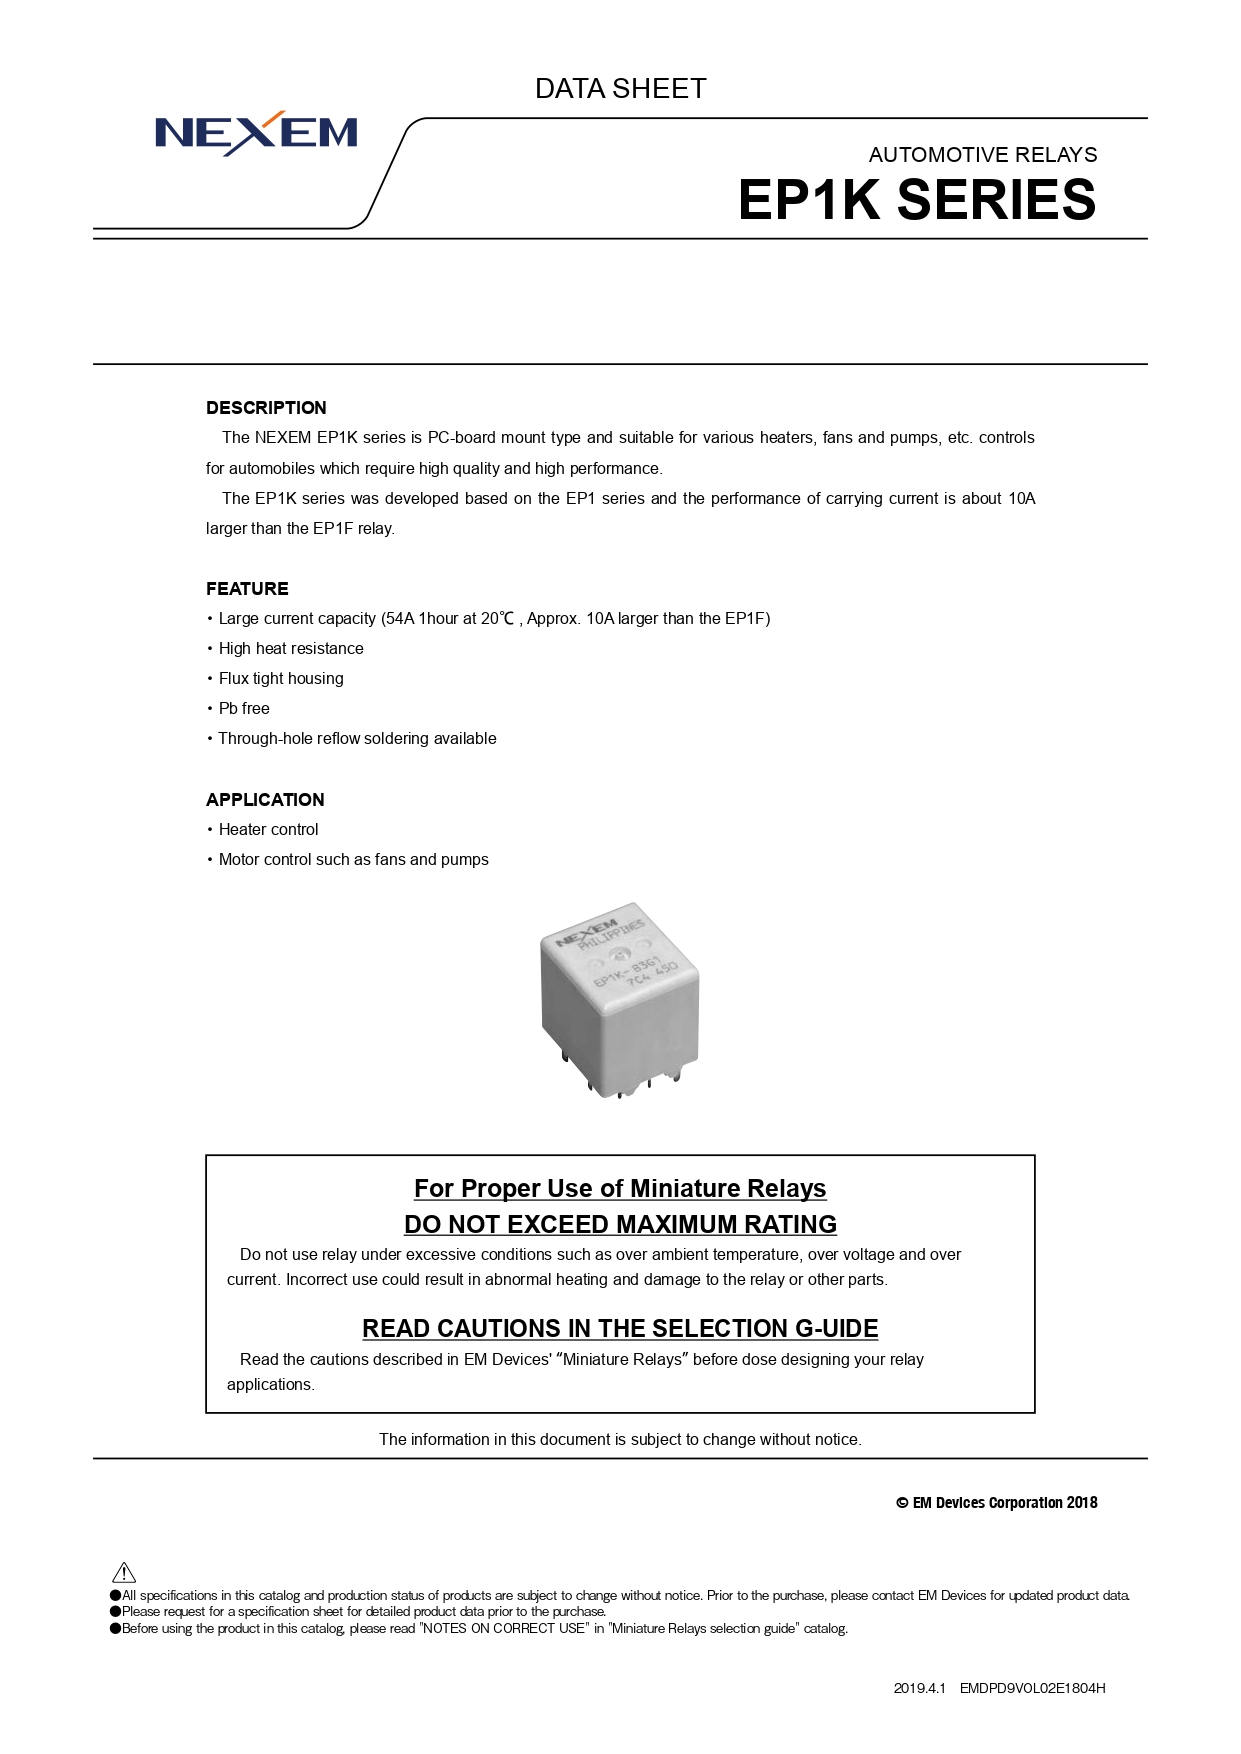 Miniature Power Relay Data Sheet pdfimage